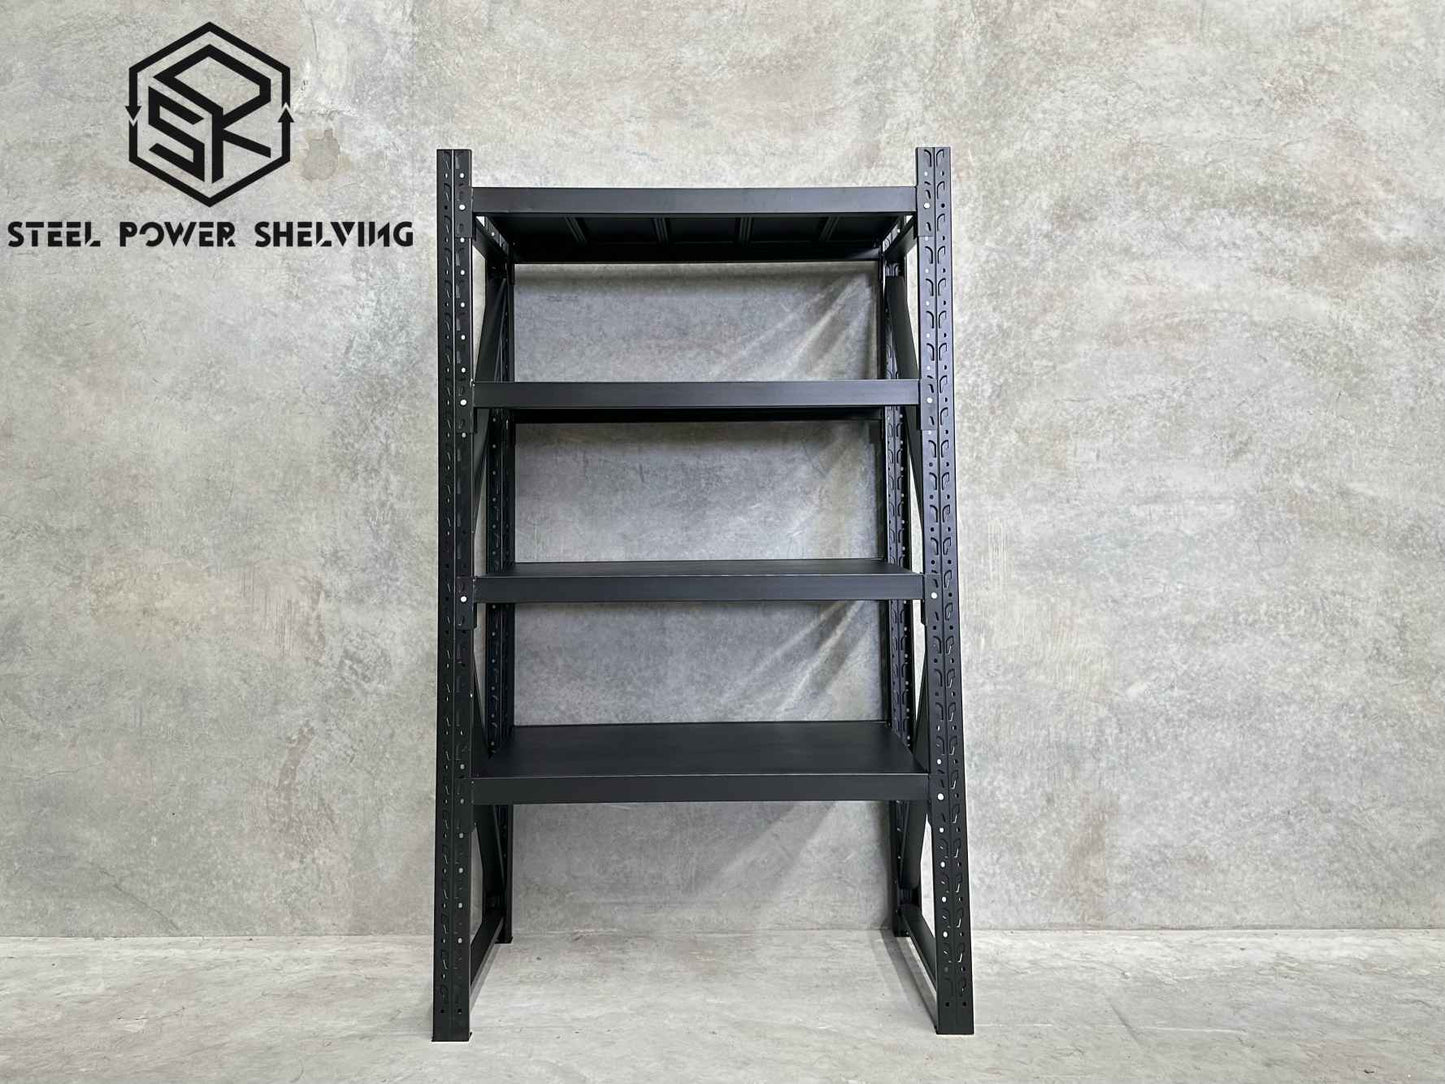 Shelf 2.0m(H)x1.2m(L)x0.6m(D)1000kg